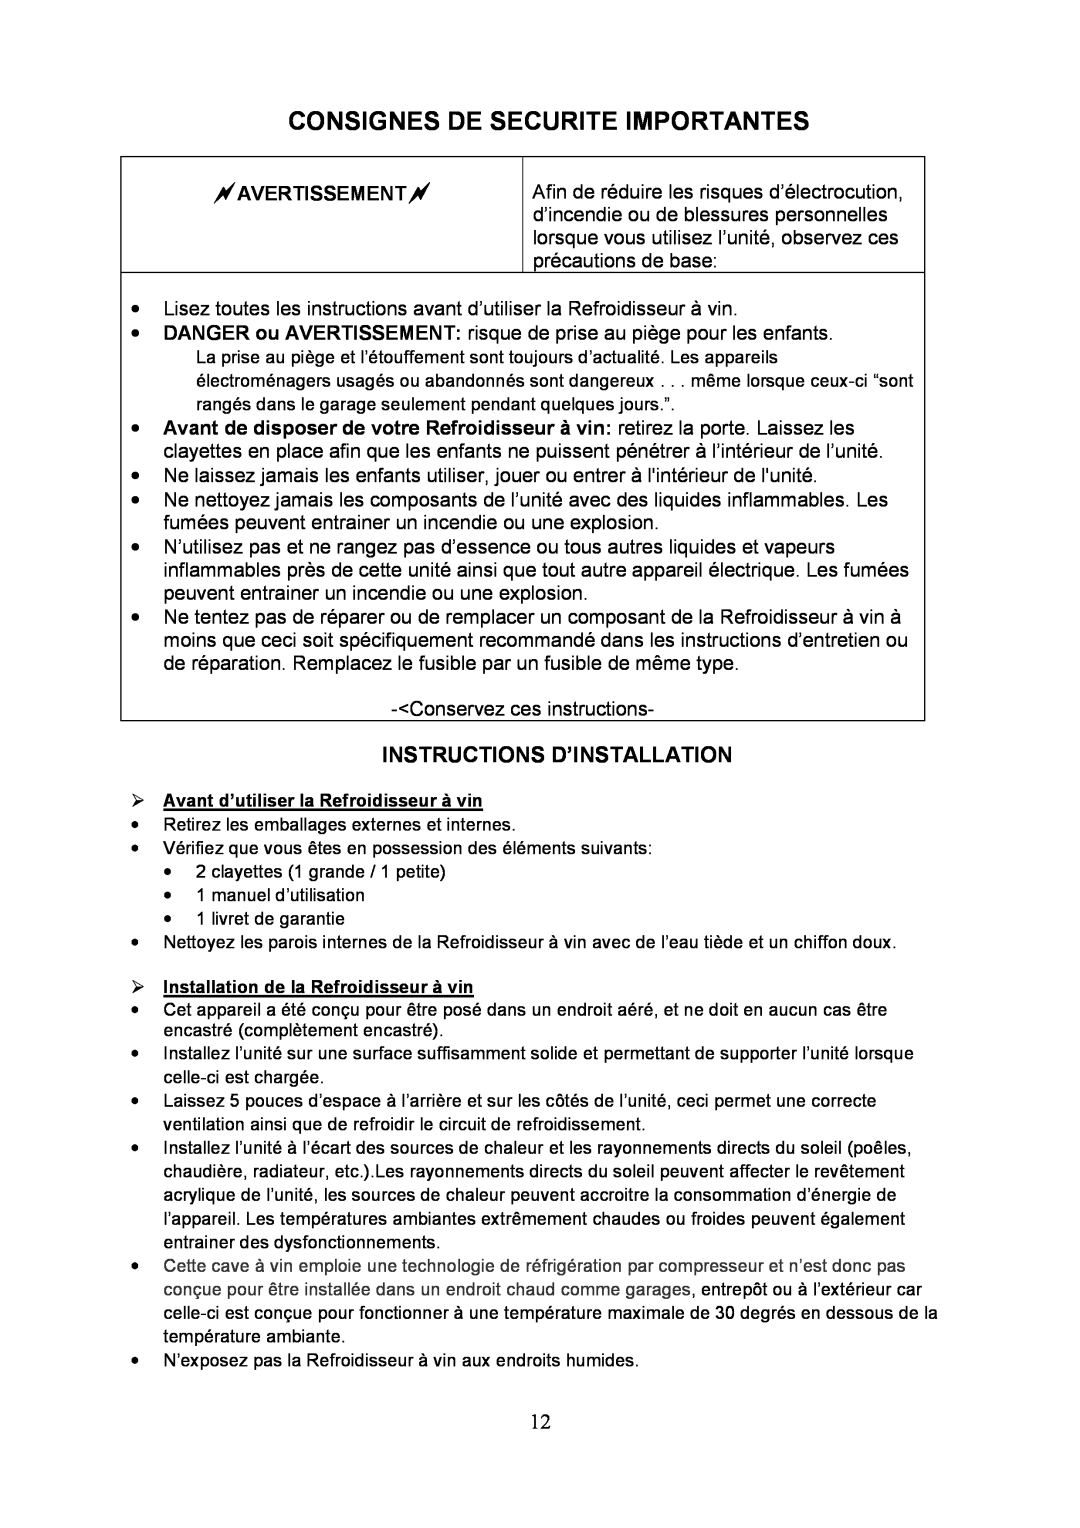 Igloo FRW154C instruction manual Consignes De Securite Importantes, Instructions D’Installation, Avertissement 